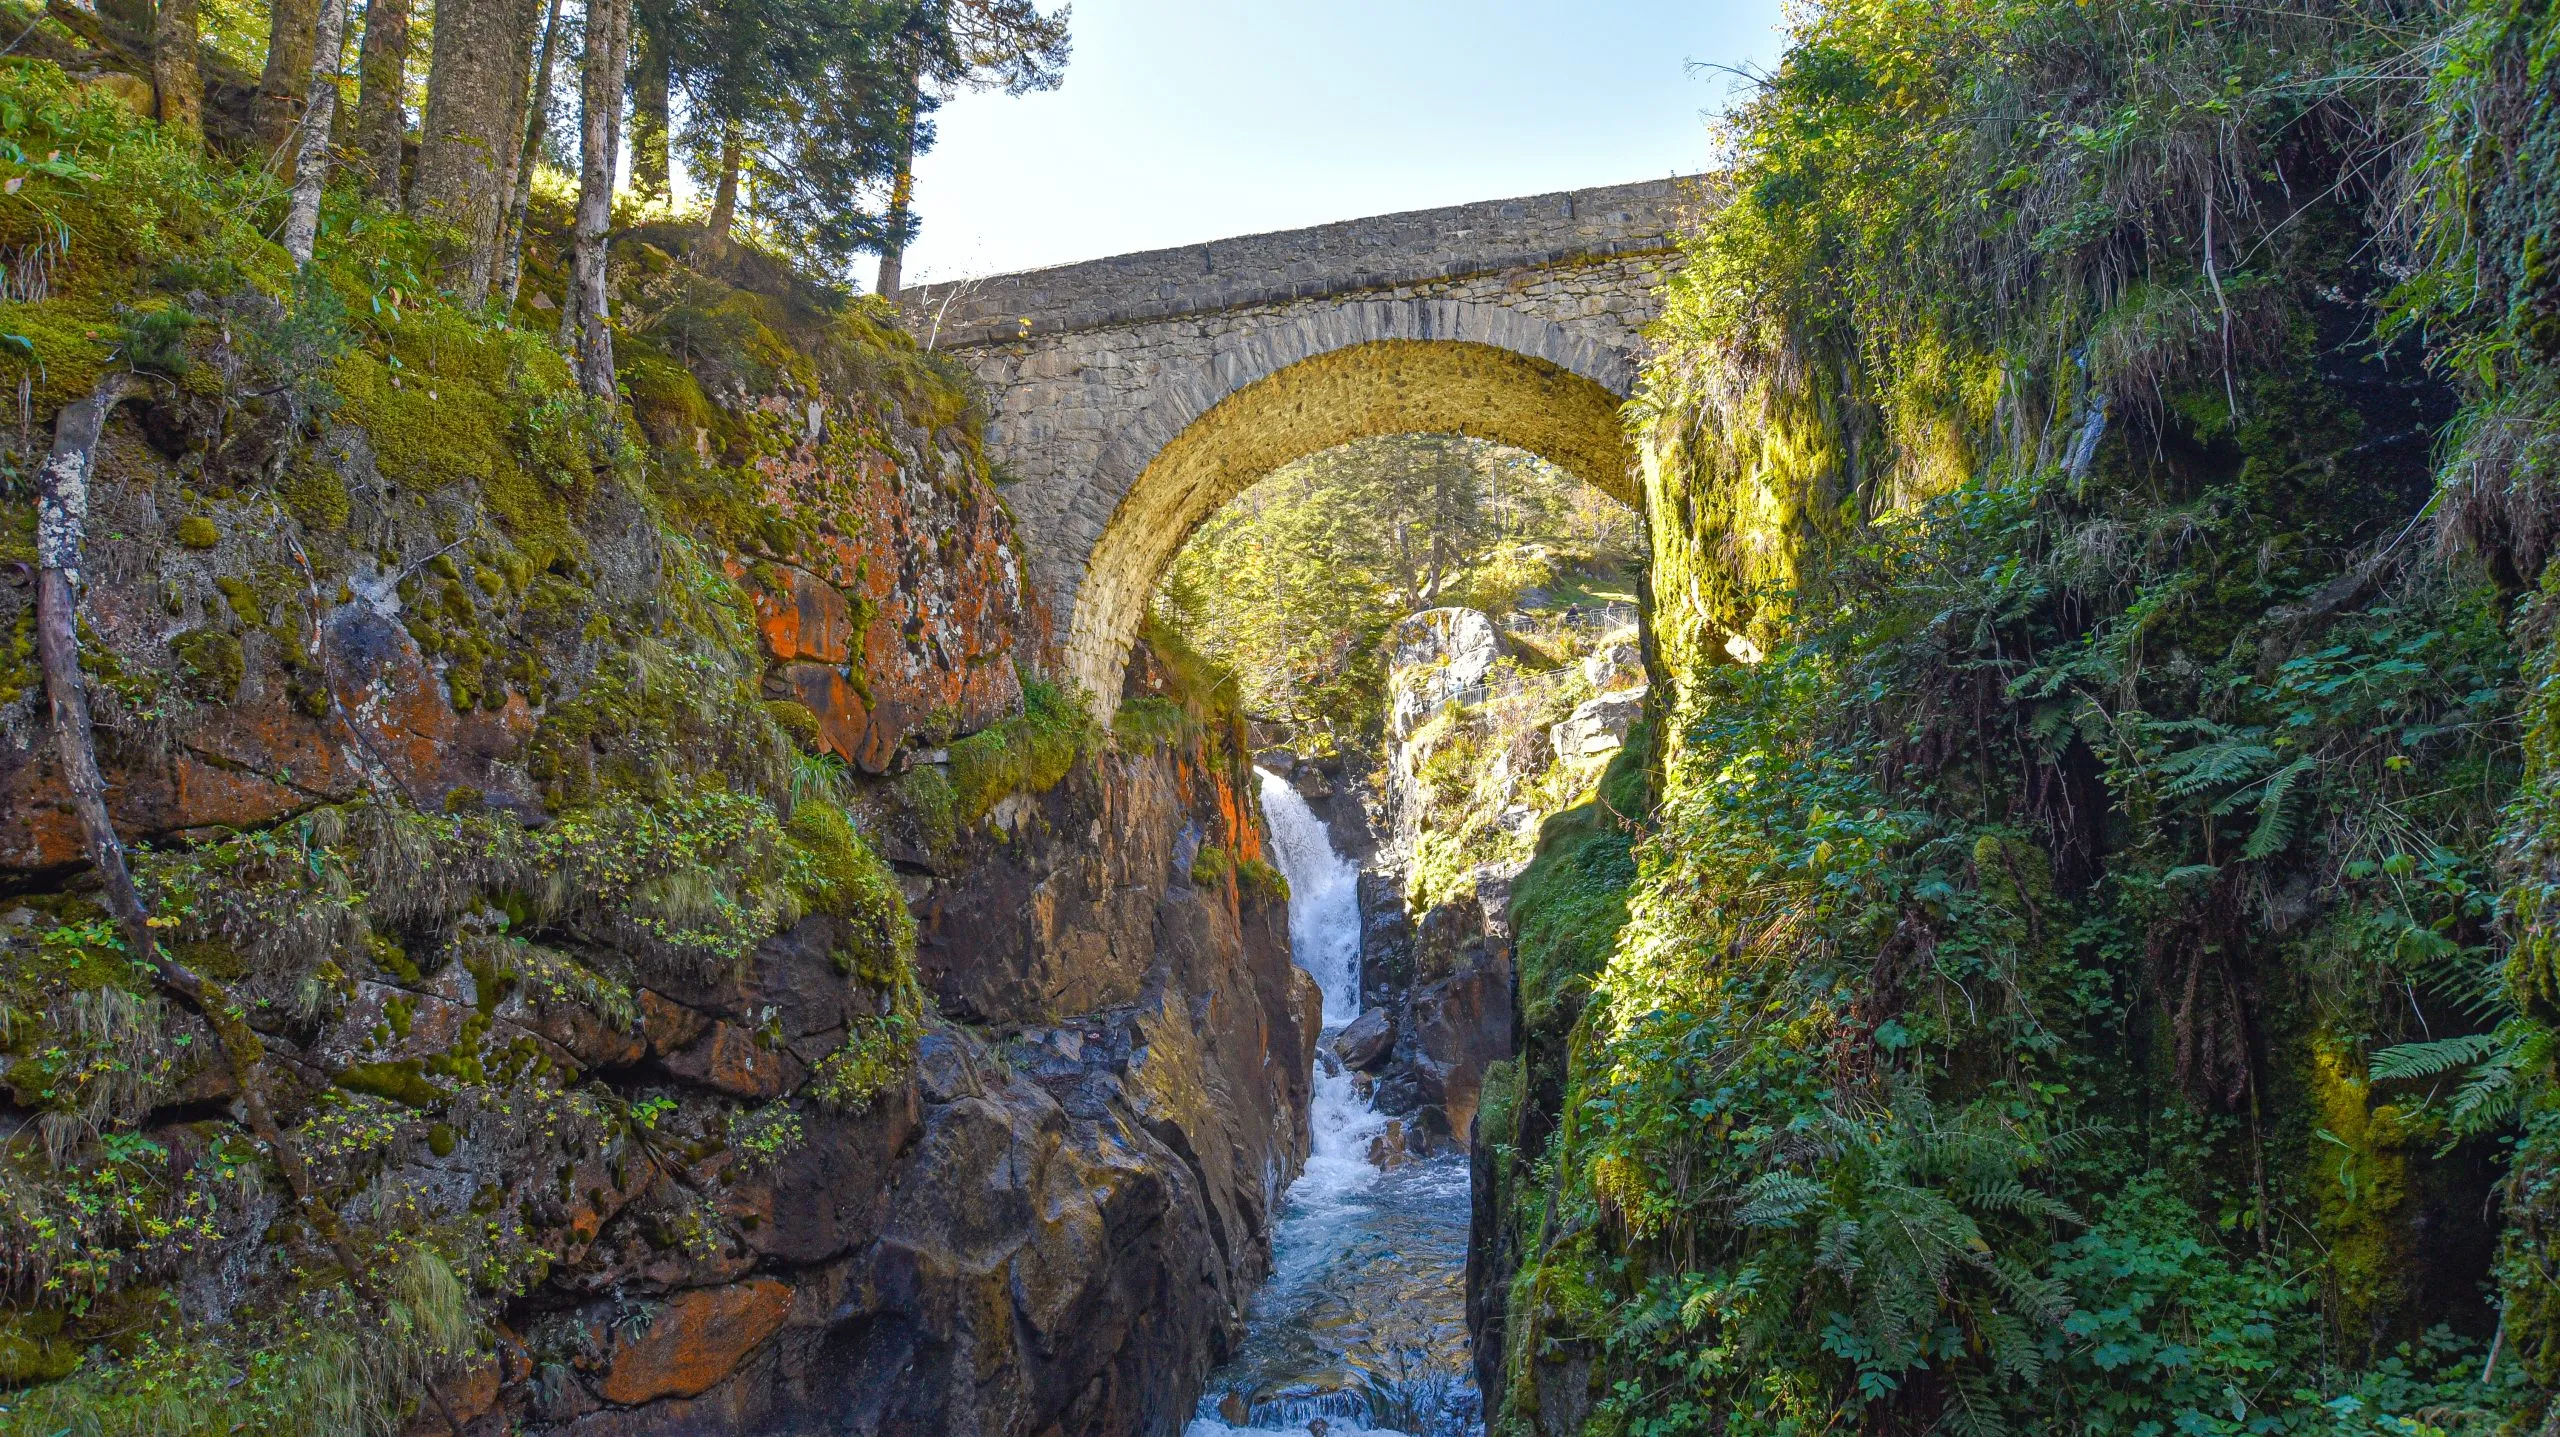 Cauterets, Frankrike - 10. oktober 2021: Broen Pont d'Espagne over Gave de Marcadau i nasjonalparken Pyreneene.